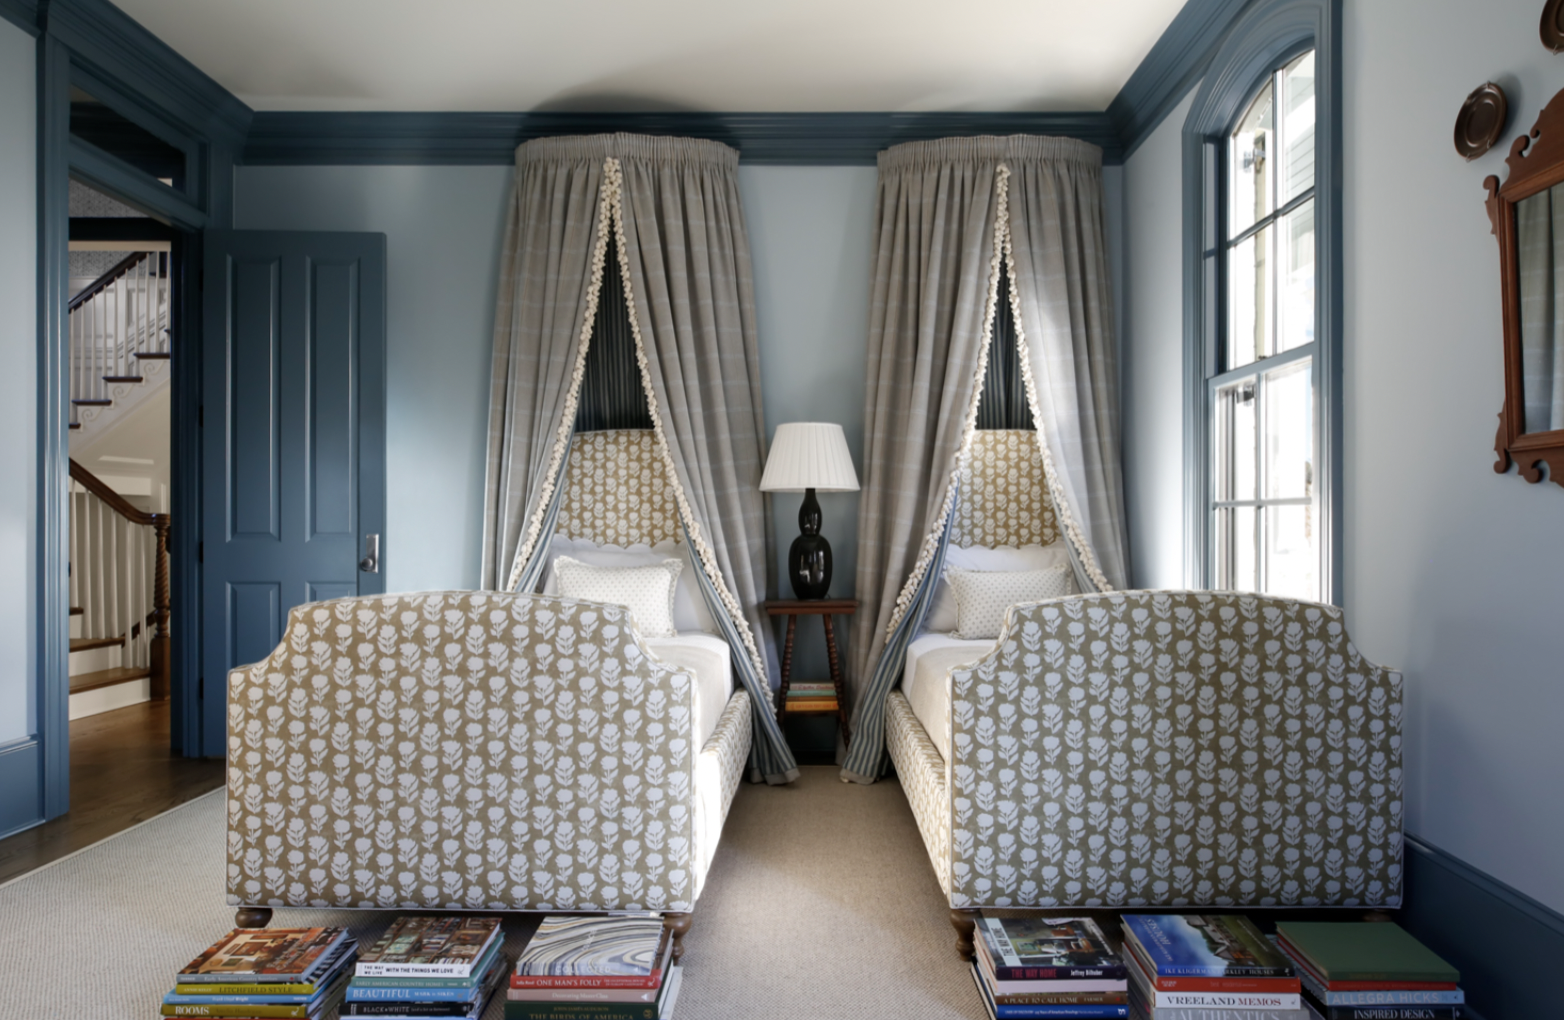 Sabbe Interiors - Paige Rumore Photography - bedroom - blue room - blue bedroom - twin beds - twin bedroom - bedroom decor